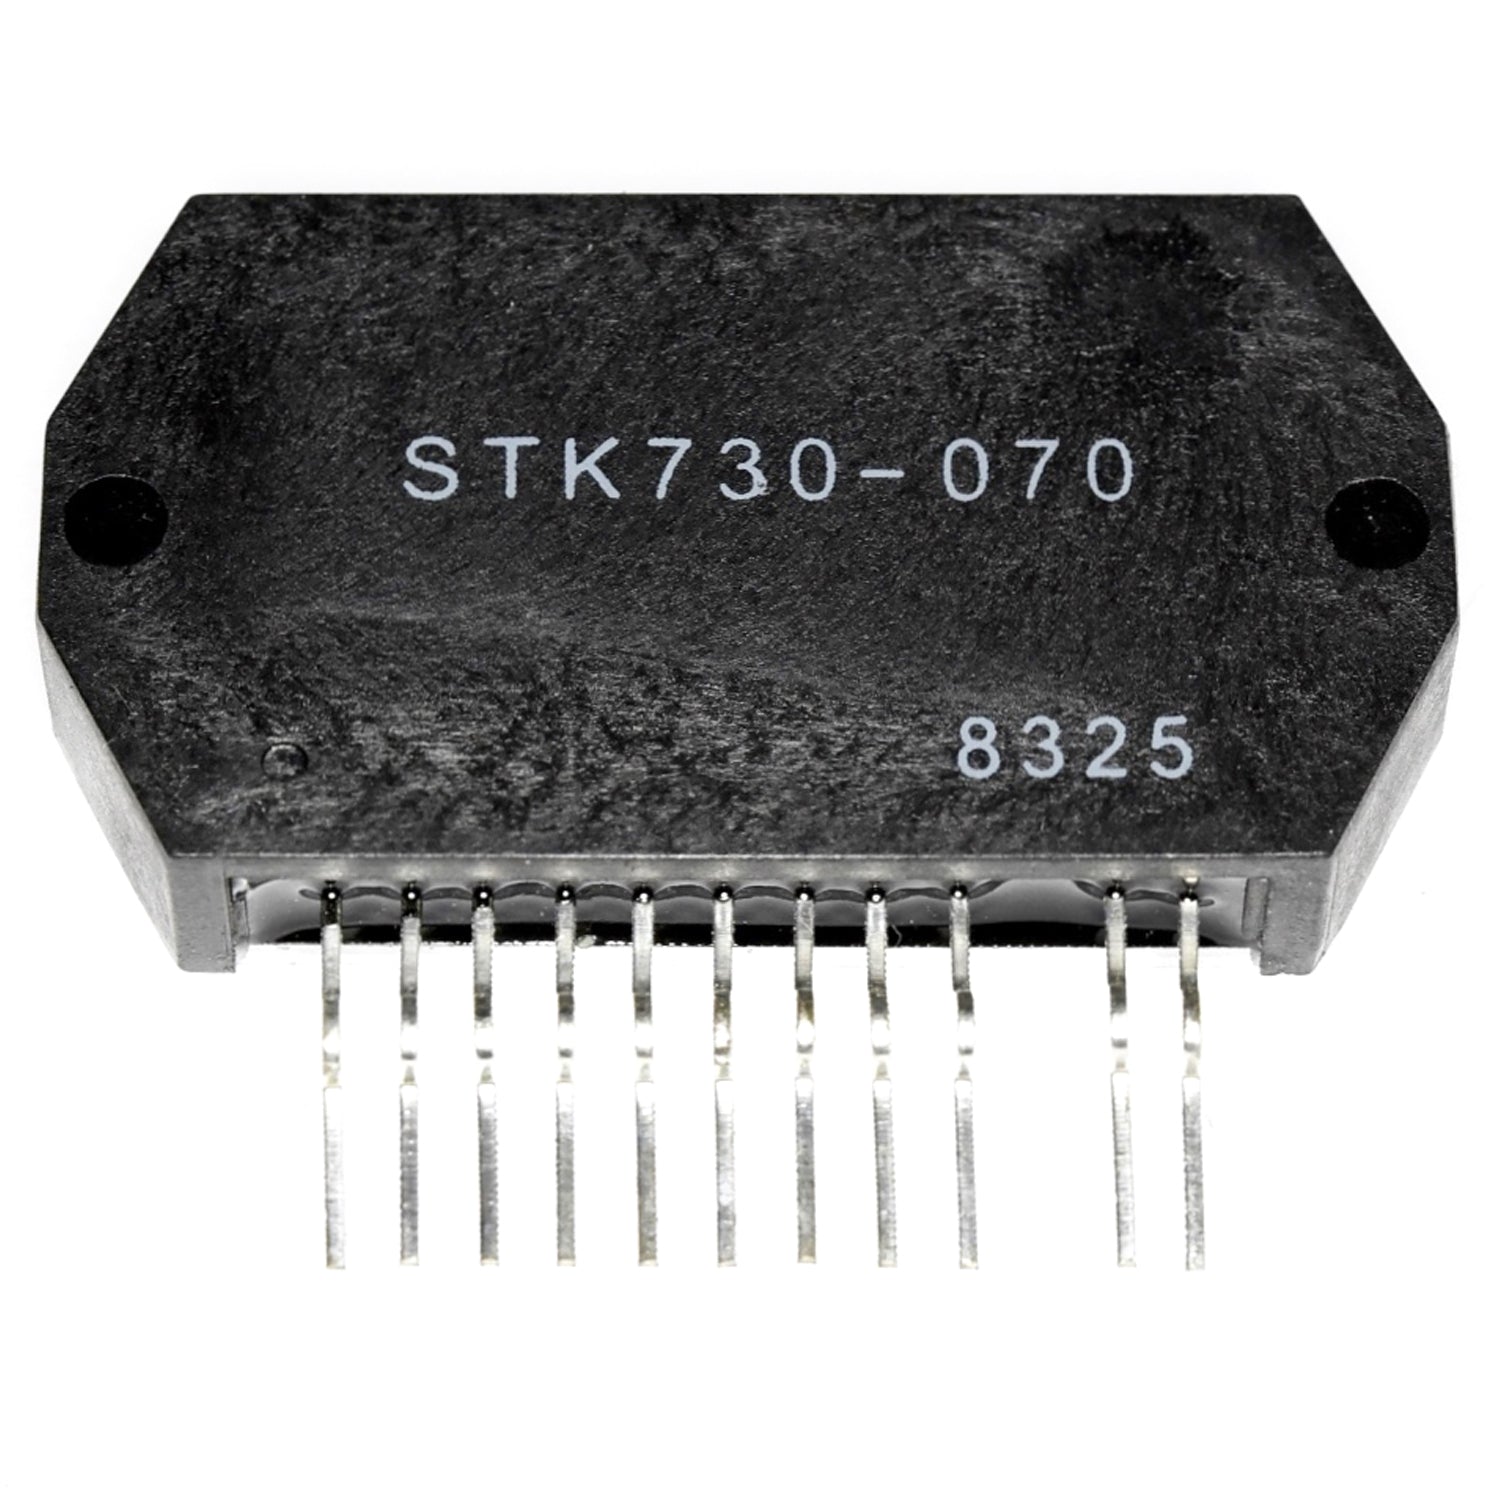 STK730-070 IC SAN